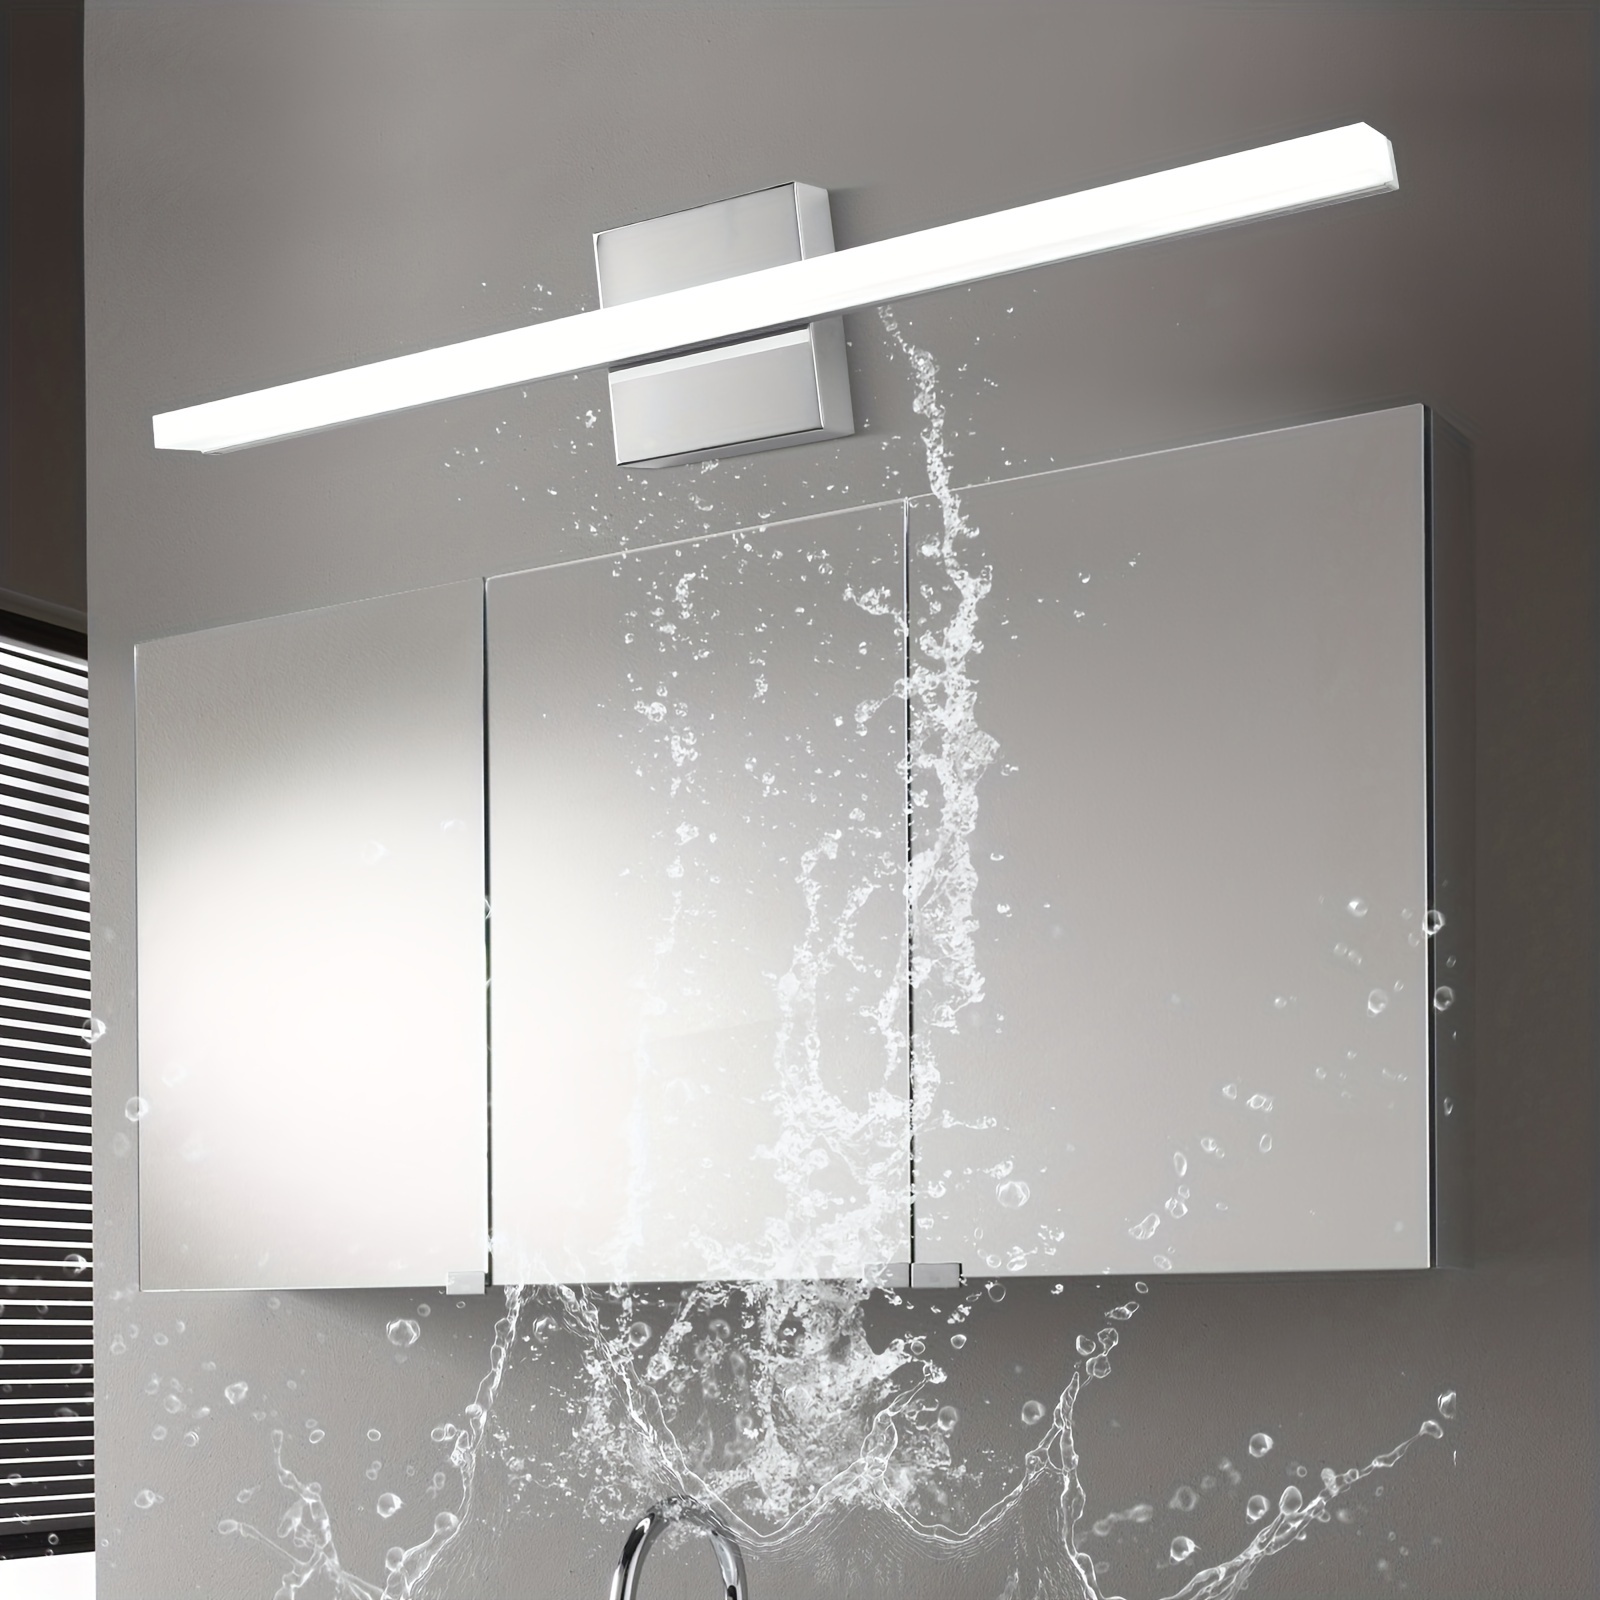 Combuh LED Bathroom Vanity Light 16 Inch 9W Black IP44 Mirror